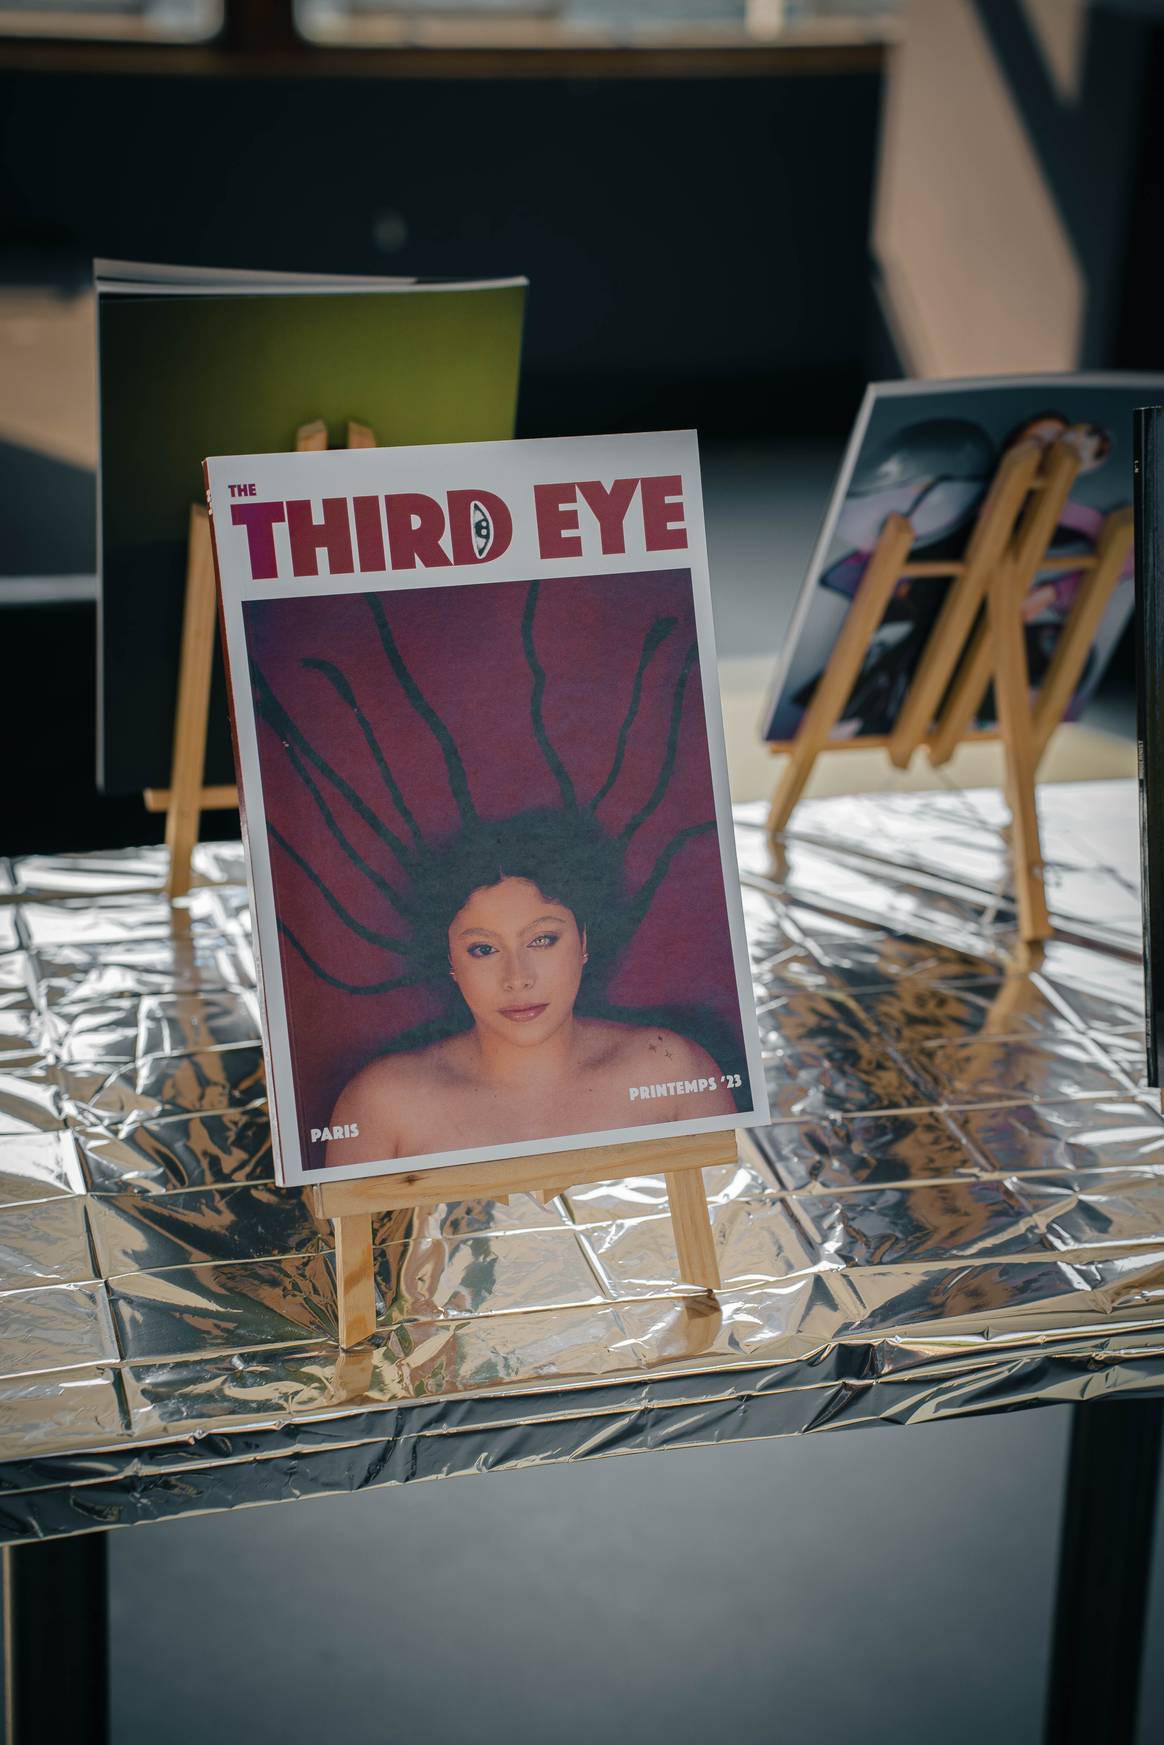 Image: "The Third Eye"